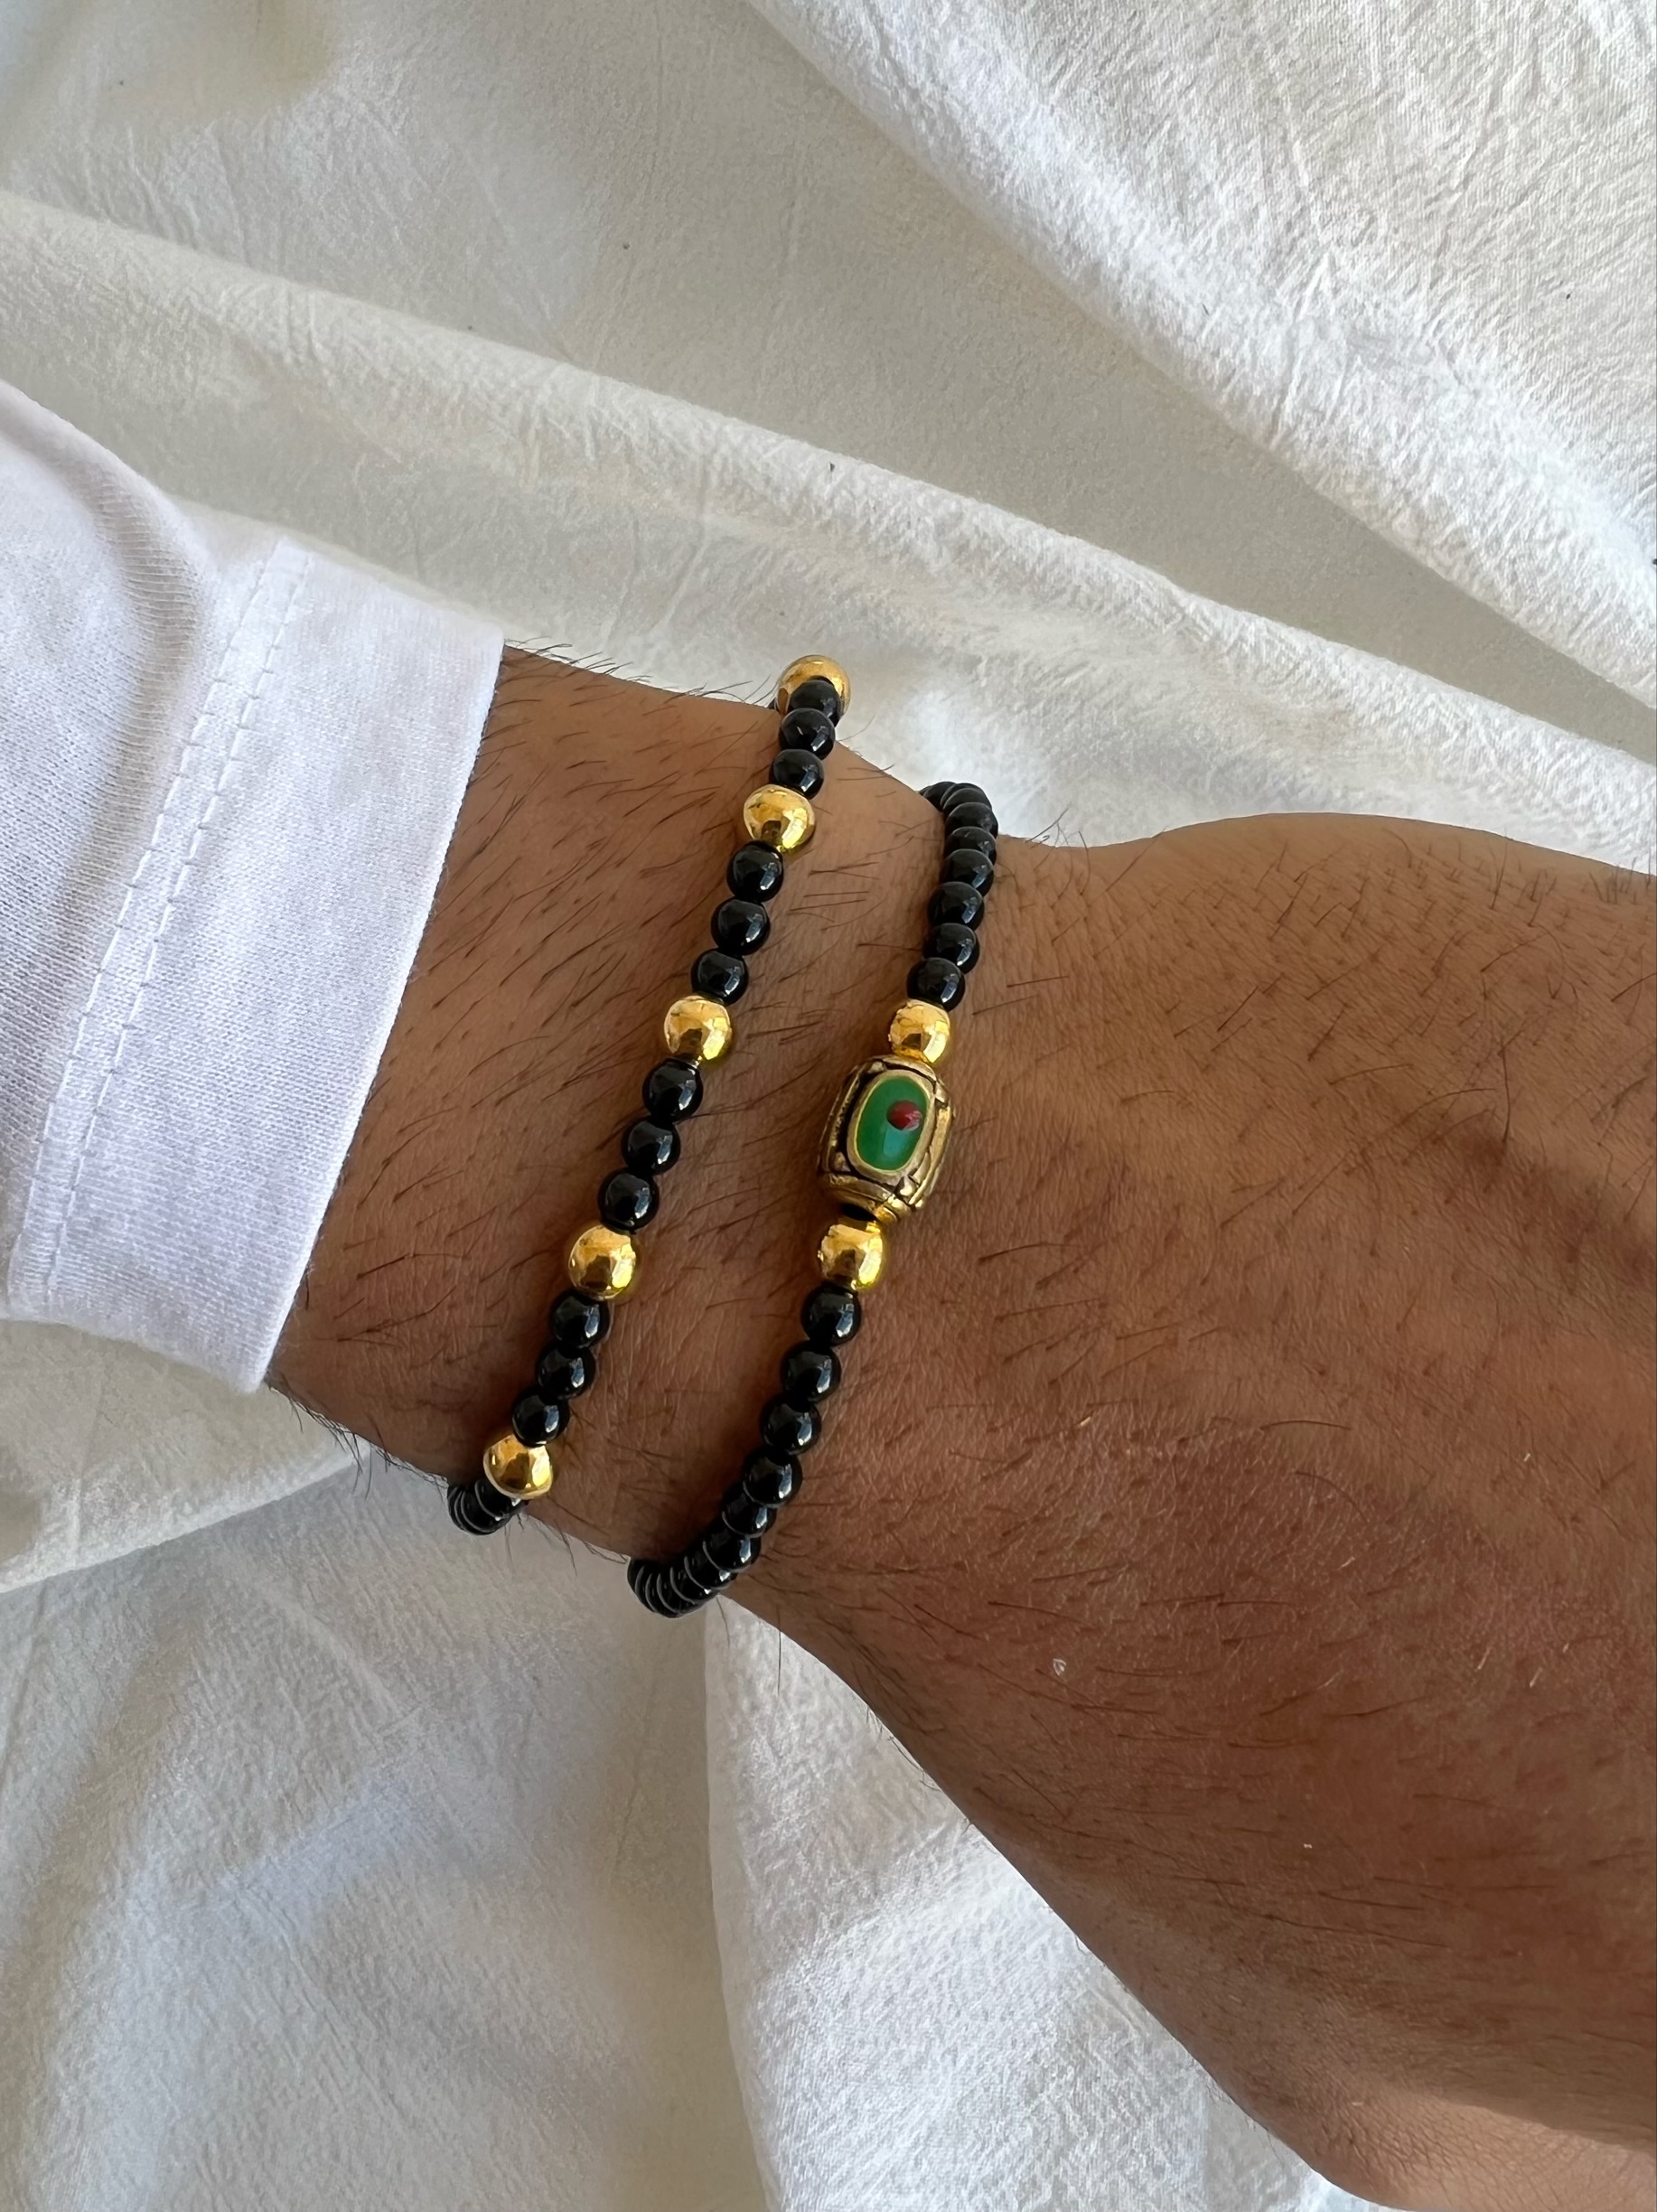 Men's Bracelet, Black Beads Bracelet, Men's Jewelry, Made in Greece, by Christina Christi Jewels.